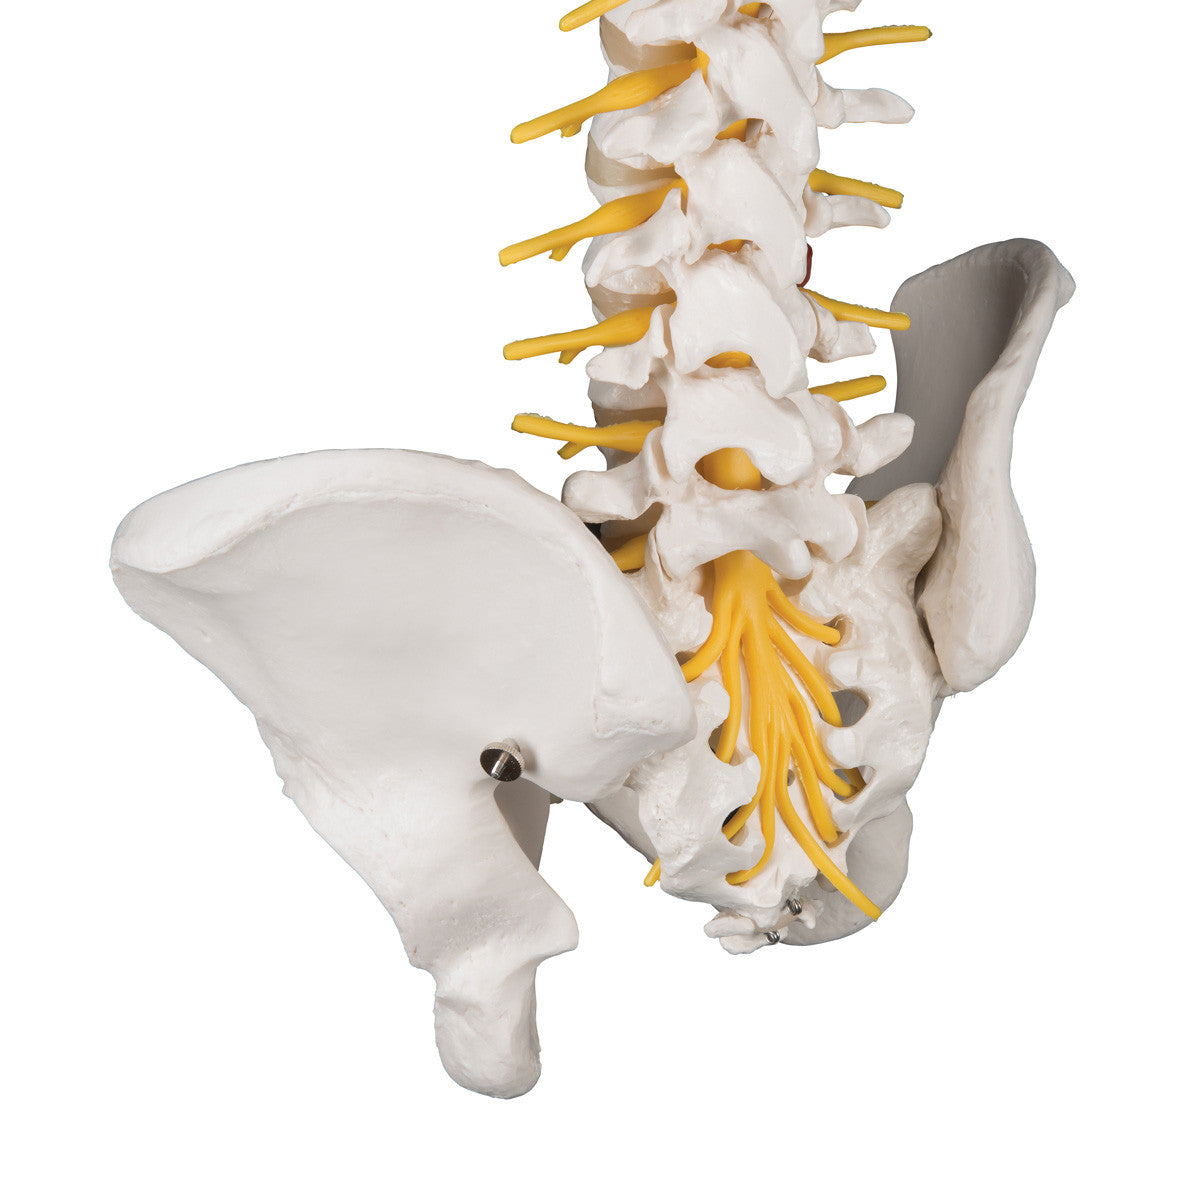 a58-5_04_1200_1200_deluxe-flexible-human-spine-model-3b-smart-anatomy__74929.1589753191.1280.1280.jpg